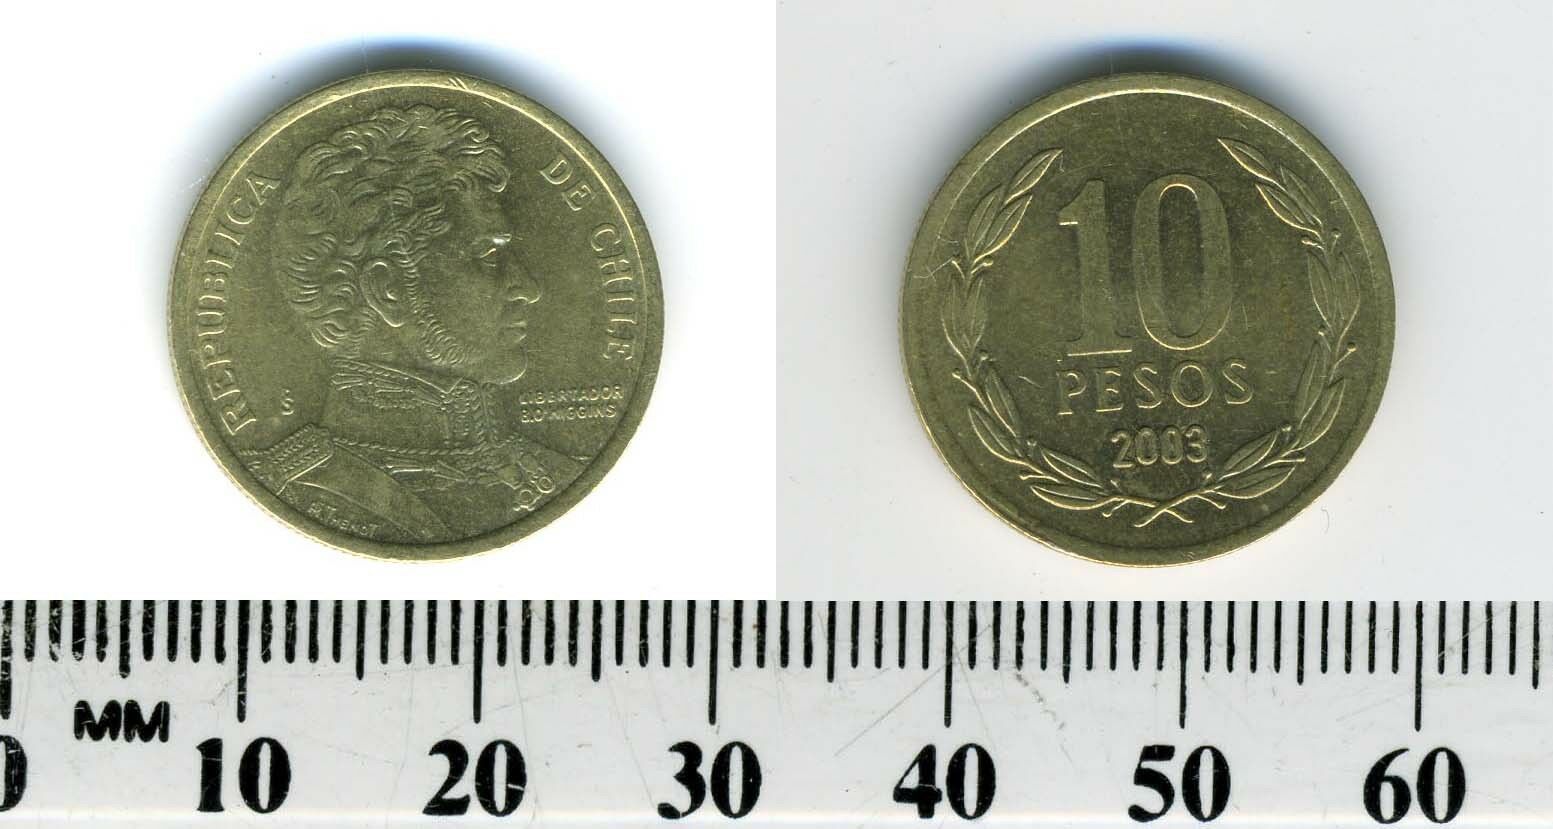 Chile 2003 - 10 Pesos Aluminum-bronze Coin - Gen. Bernardo O'higgins Bust